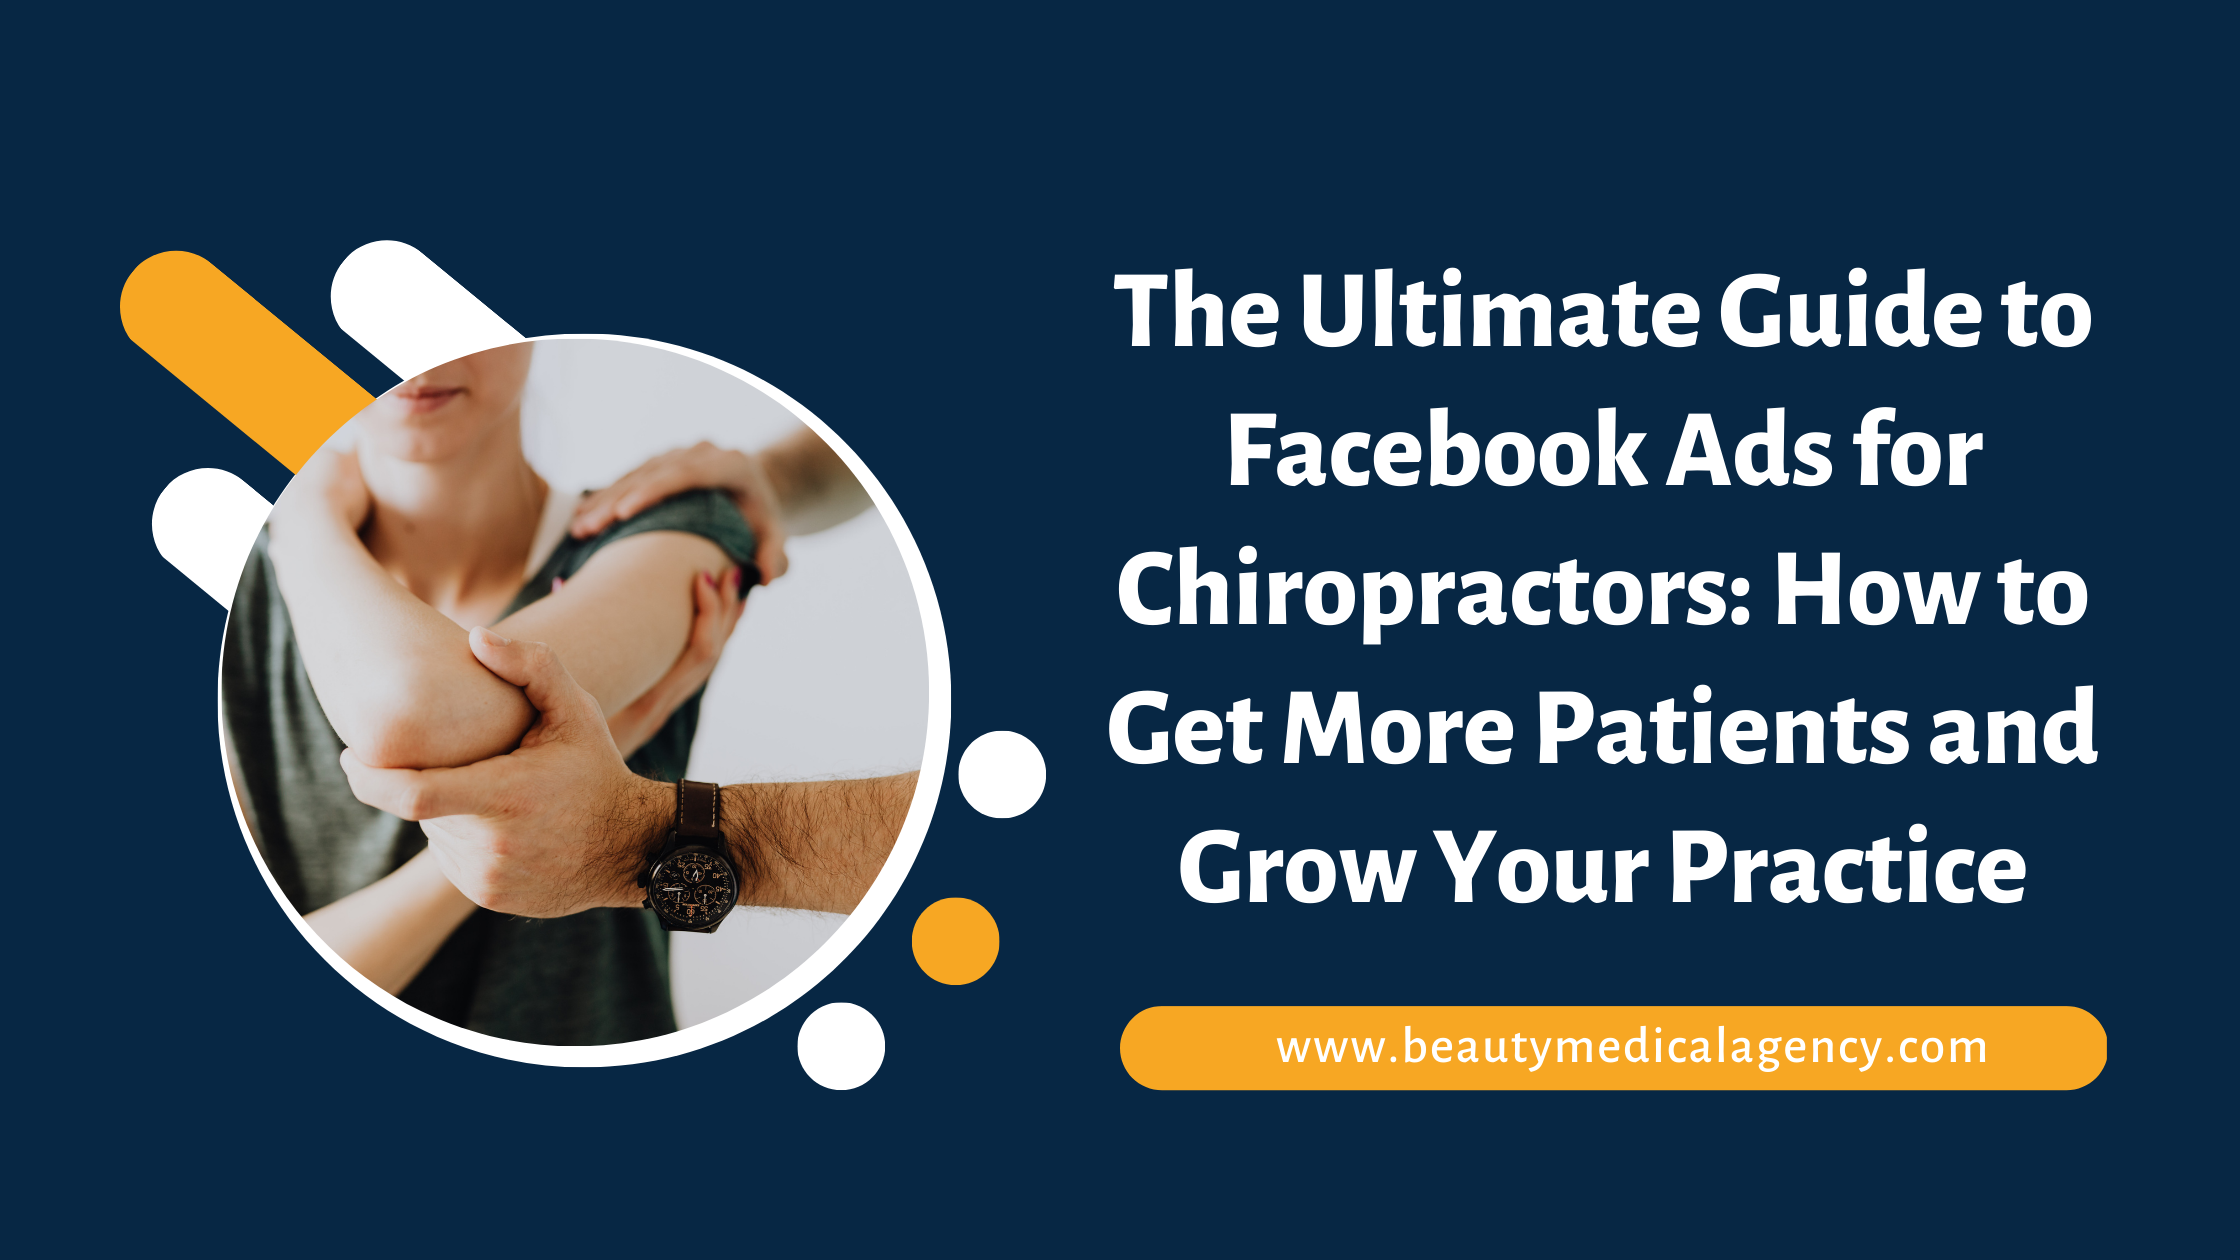 Chiropractic Practice with Digital Marketing Strategies